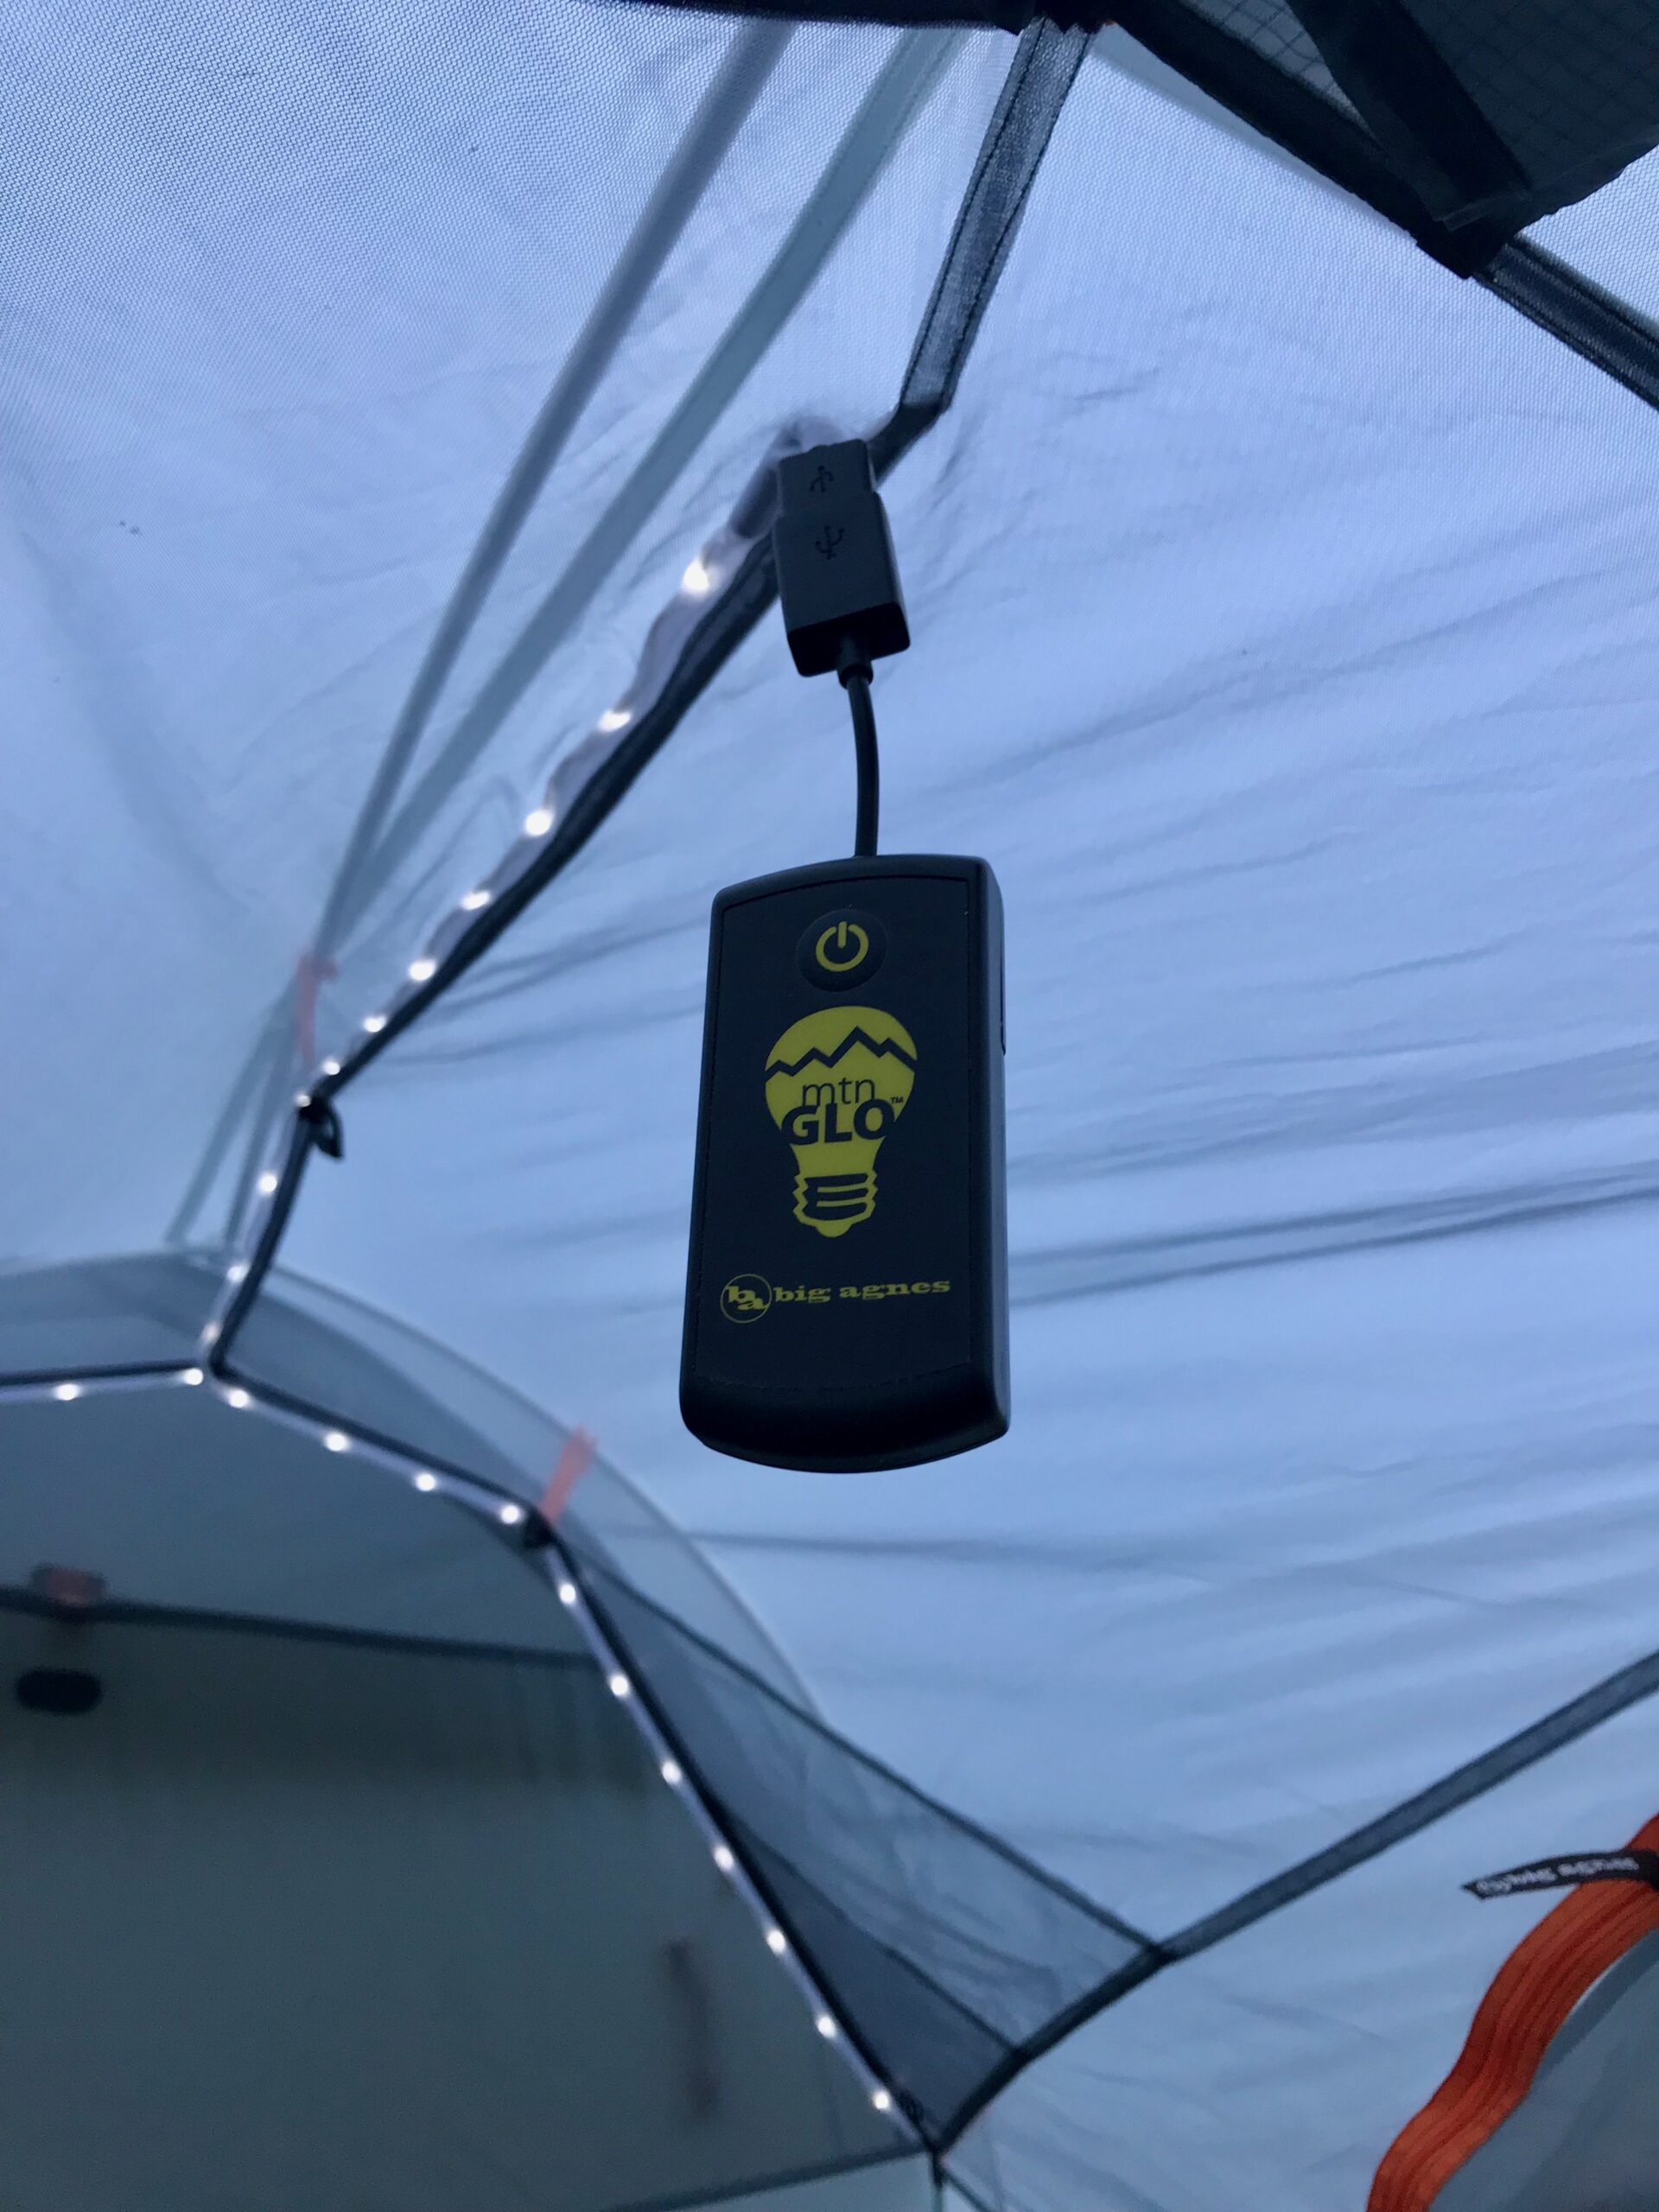 Camping Gear photo